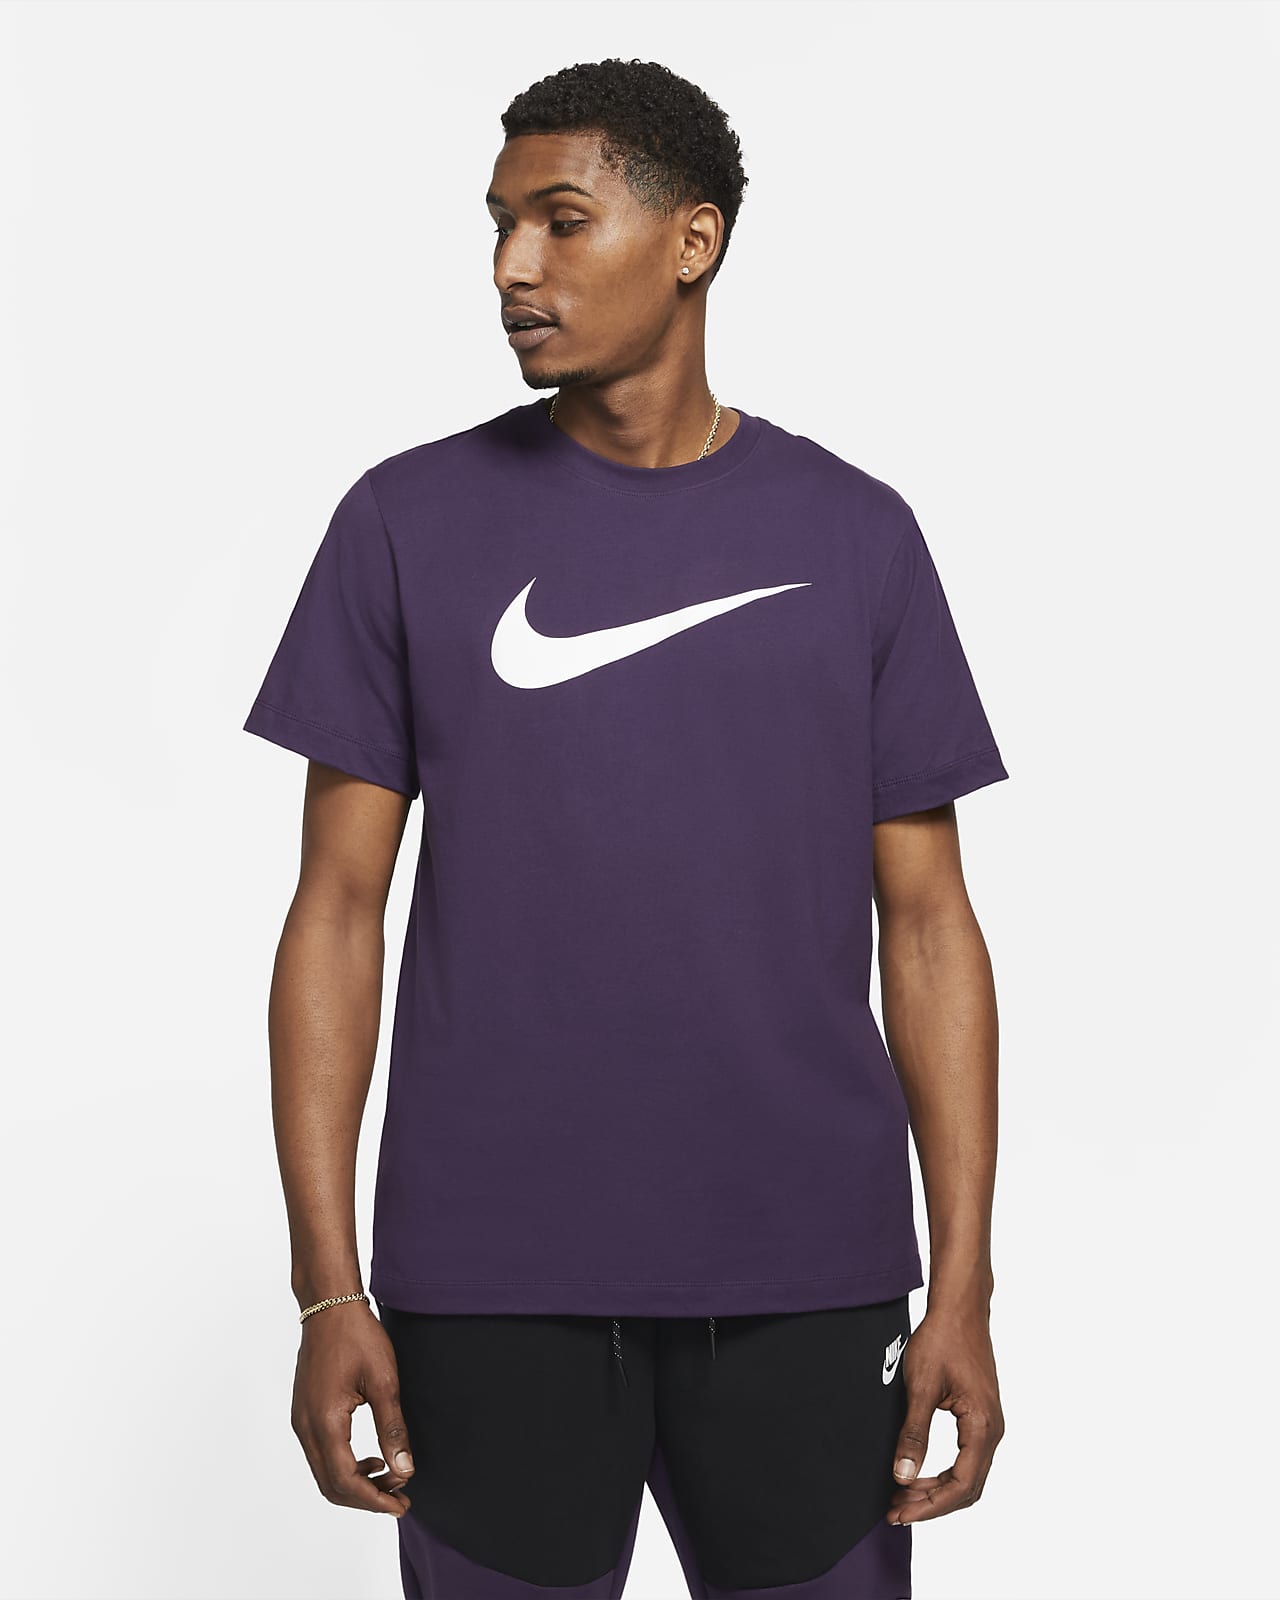 purple black nike shirt